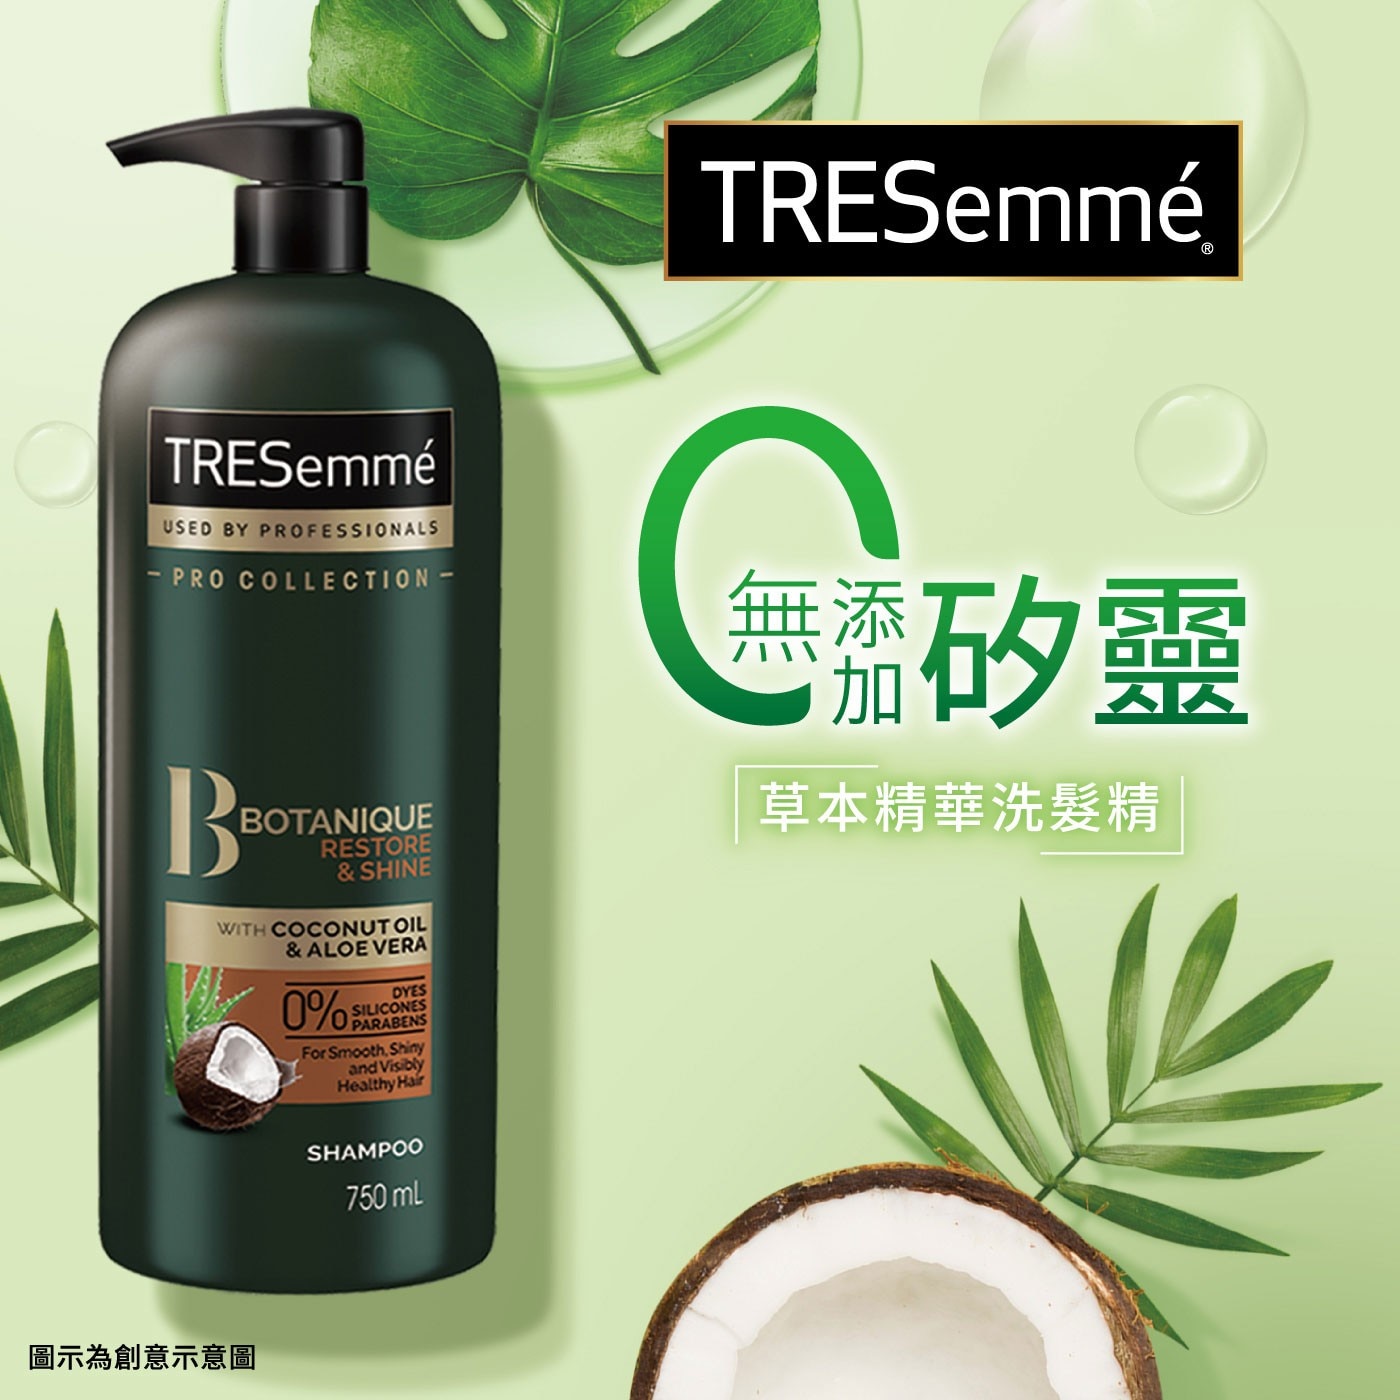 TRESemme 無添加矽靈草本精華洗髮精 750毫升 X 2入添加配方椰子油精華保護髮絲使秀髮柔順易打理